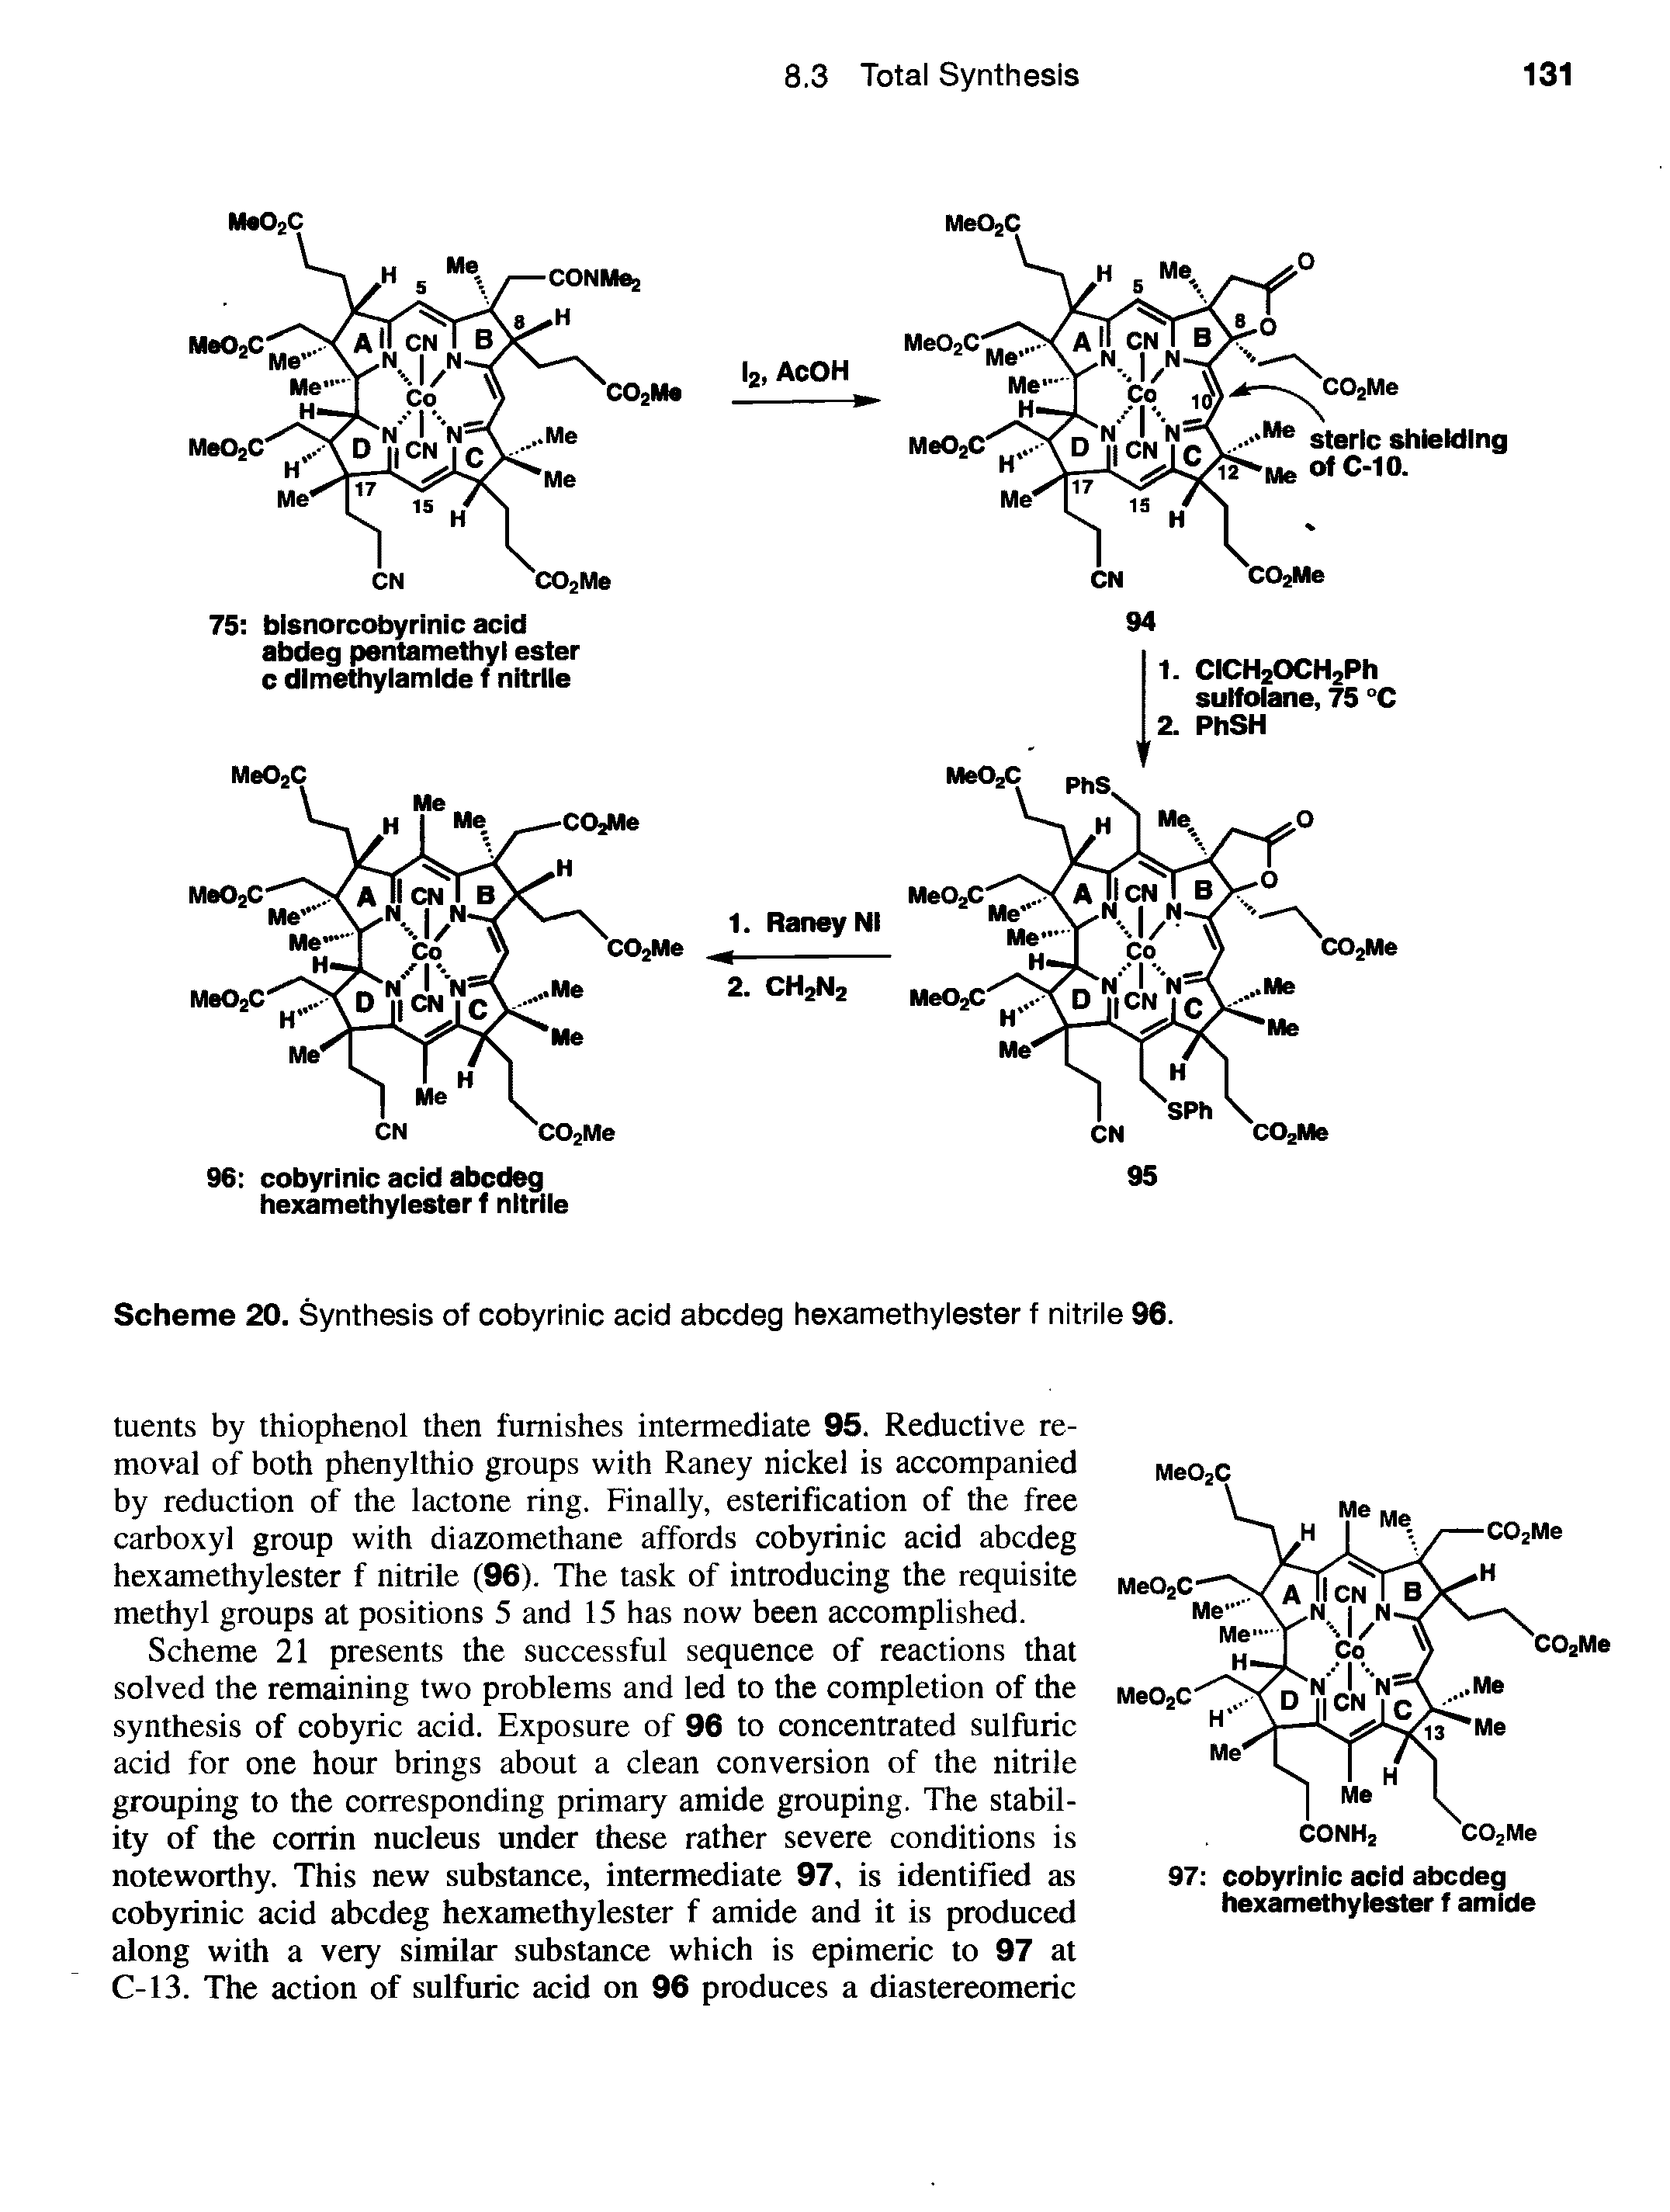 Scheme 20. Synthesis of cobyrinic acid abcdeg hexamethylester f nitrile 96.